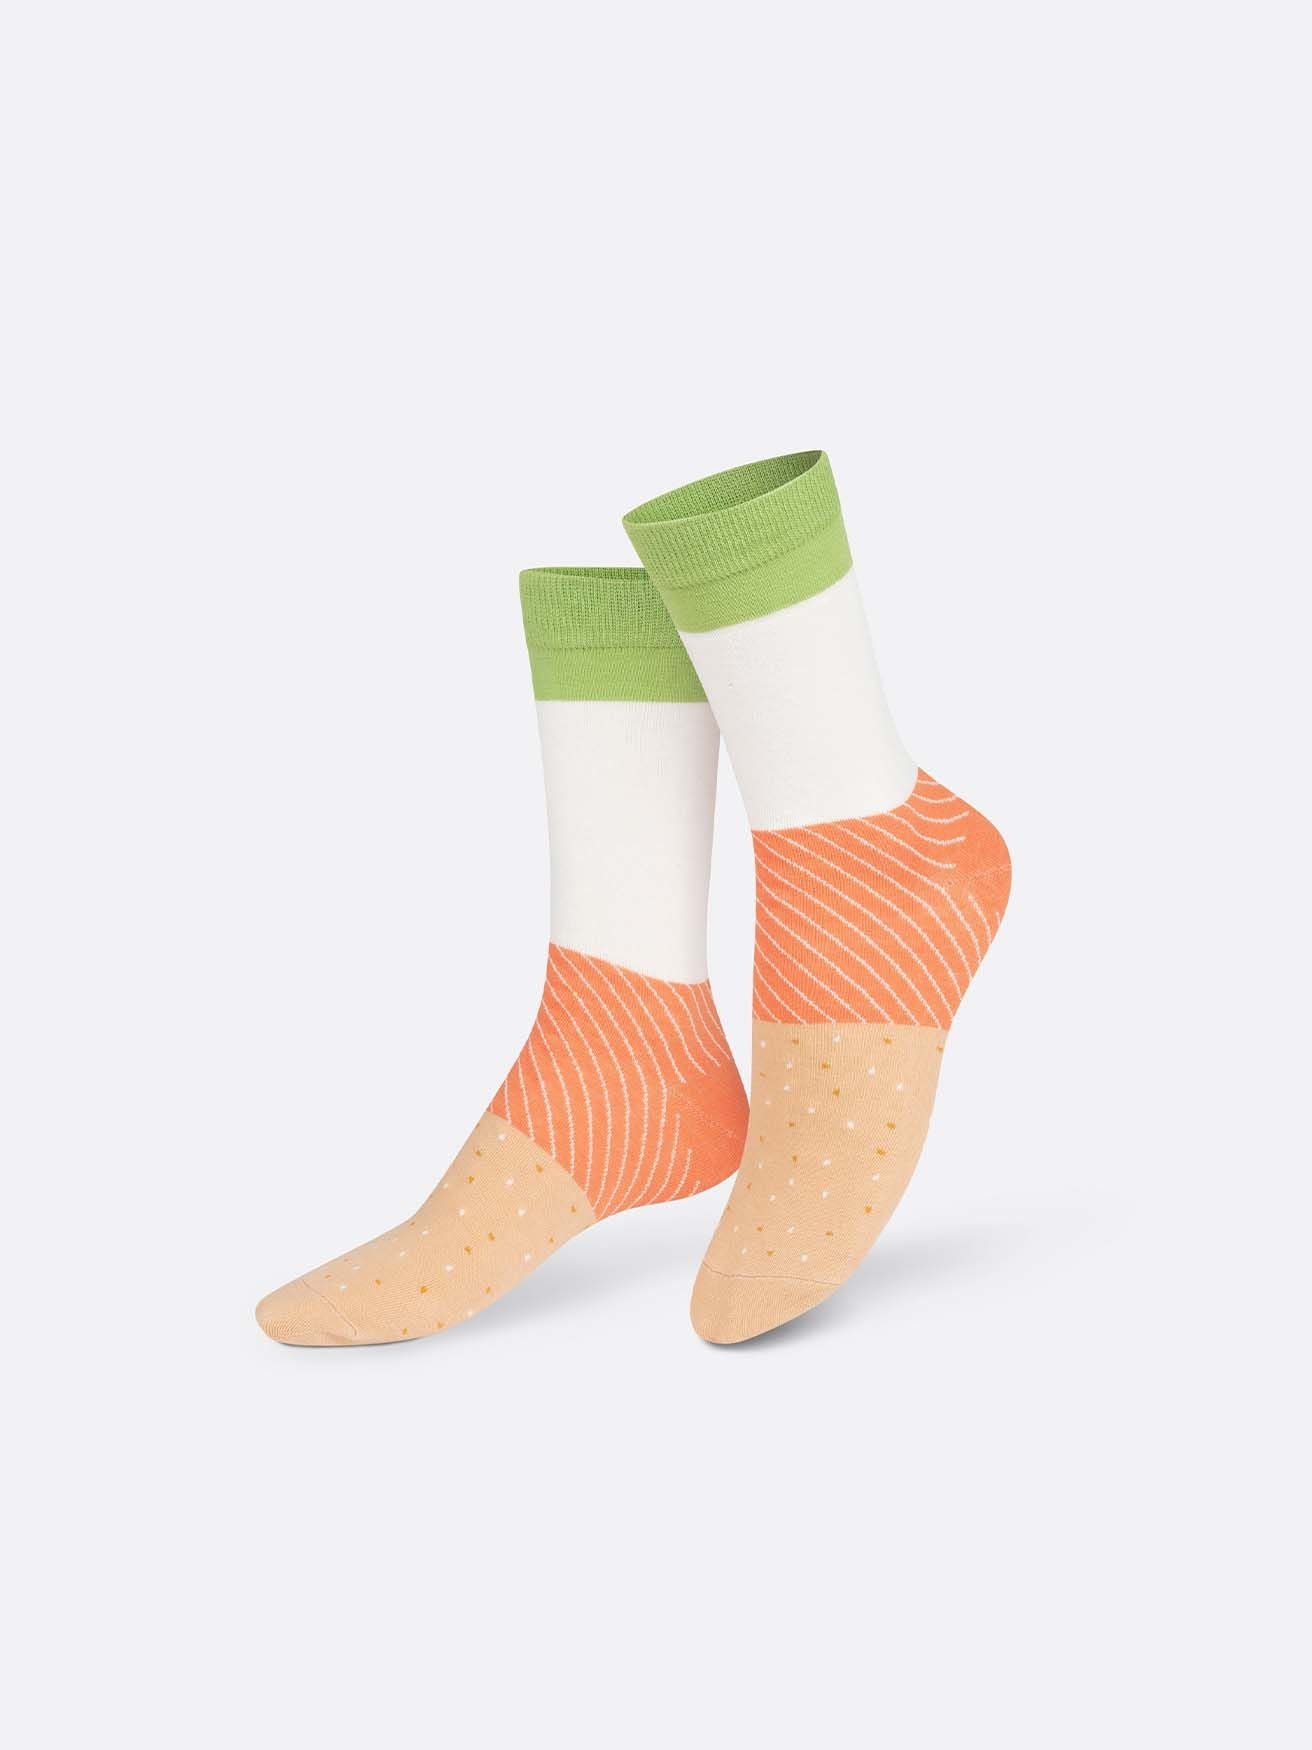 Salmon Bagel Socks